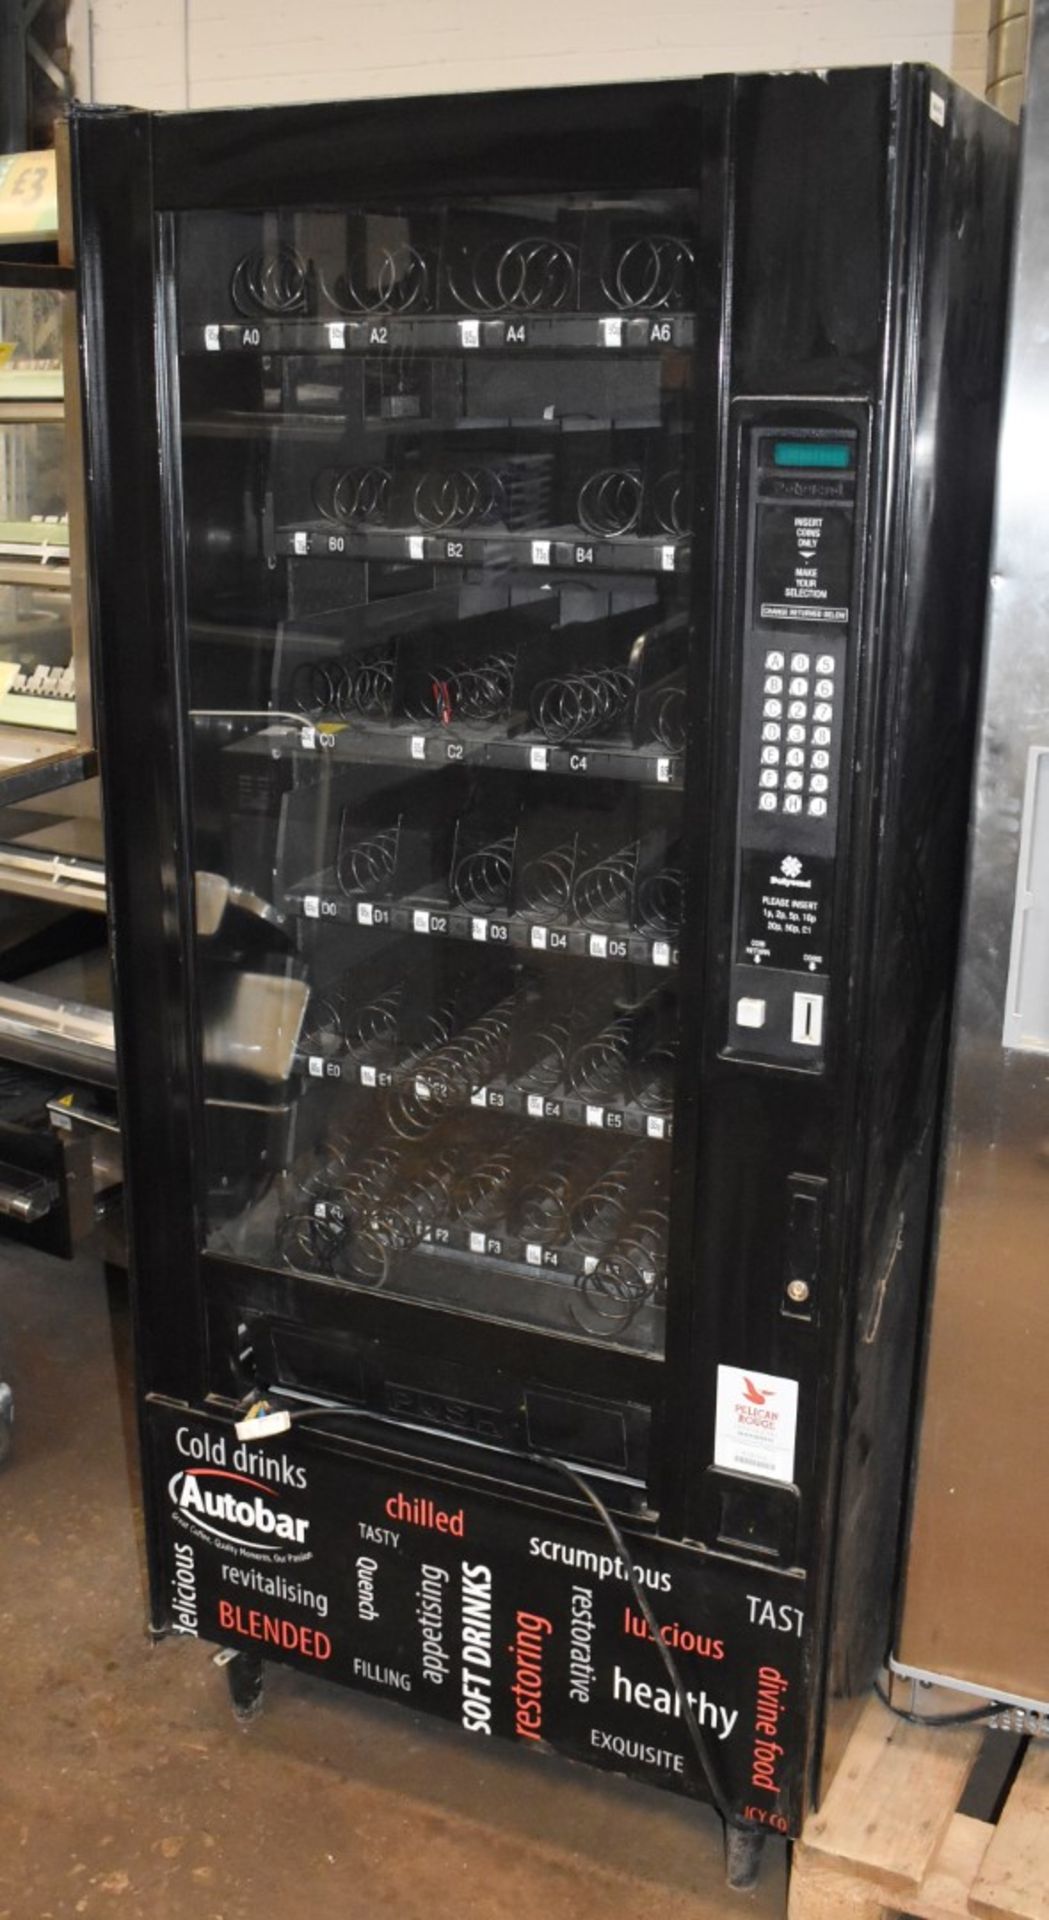 1 x Polyvend 453 Snack Food Vending Machine - H182 x W65 x D72 cms - Ref: GCA153 WH5 - CL011 - - Image 2 of 12